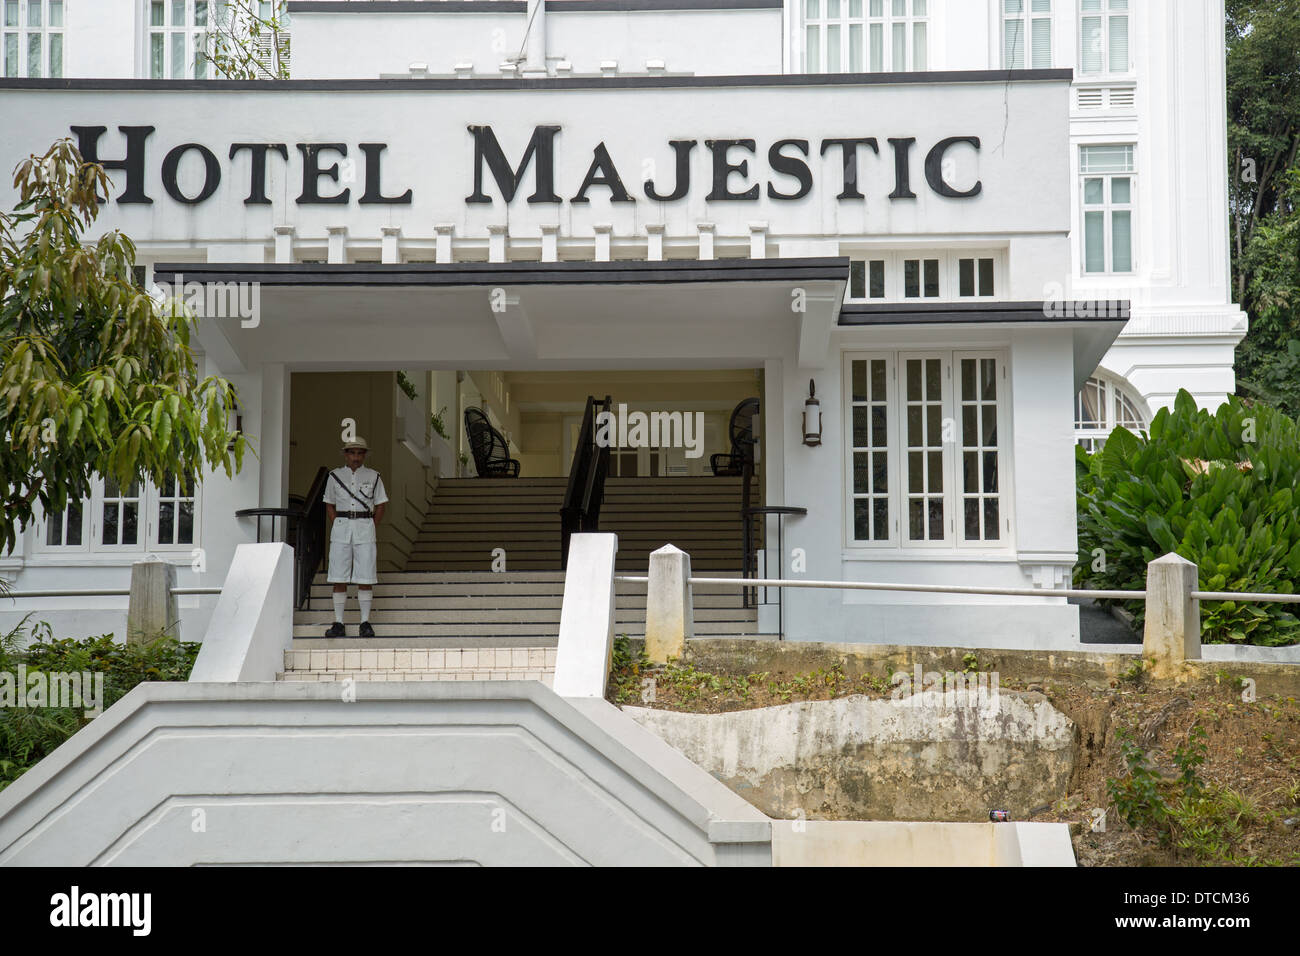 Hotel majestic main entrance Stock Photo